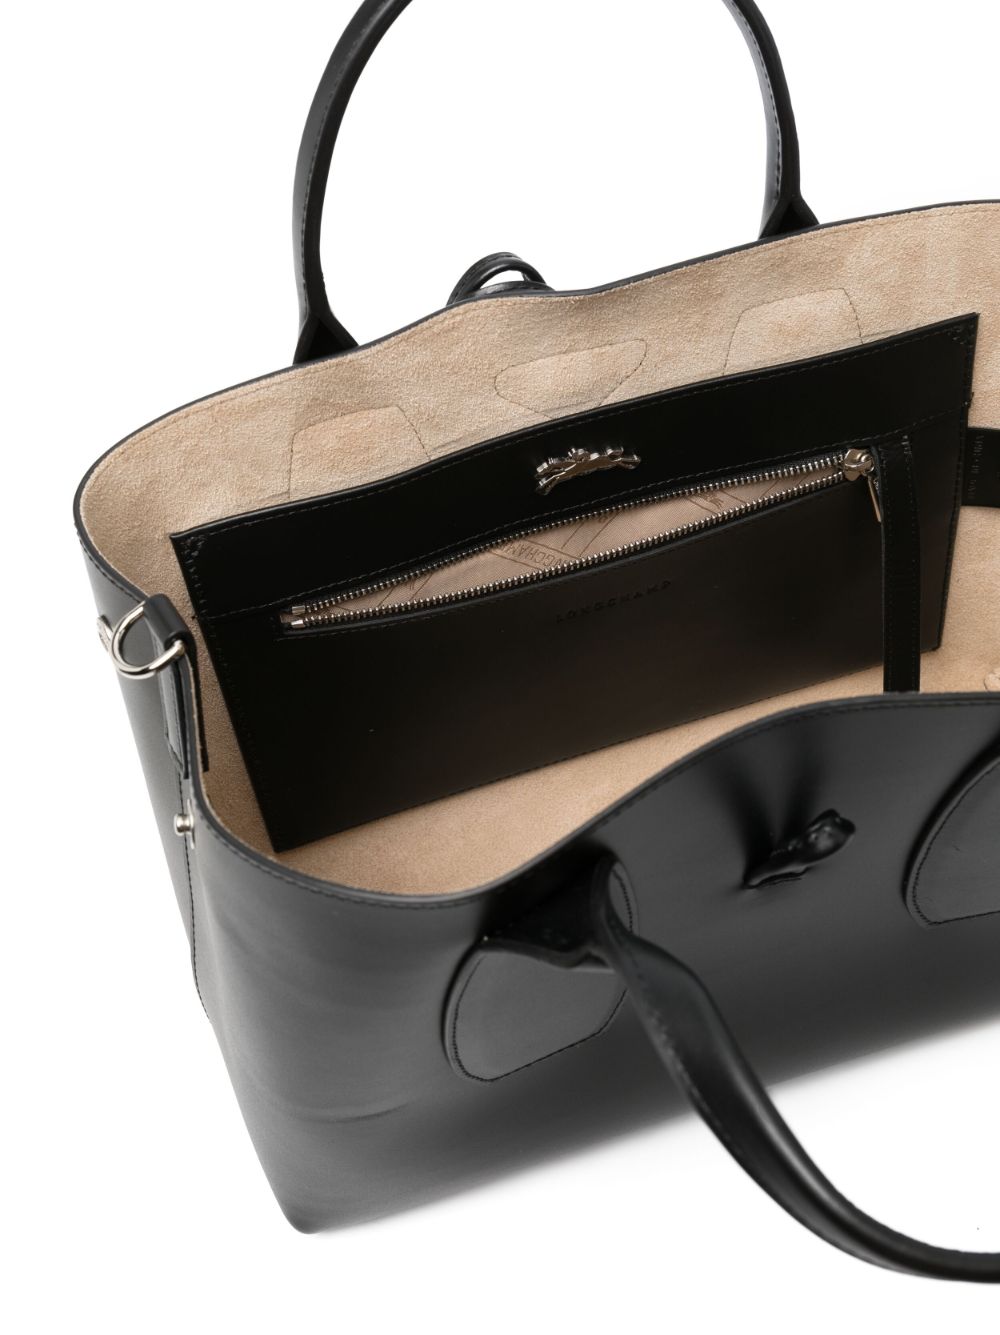 Longchamp 'Roseau' Leather Top handle Shoulder Tote Handbag, Black :  Clothing, Shoes & Jewelry 